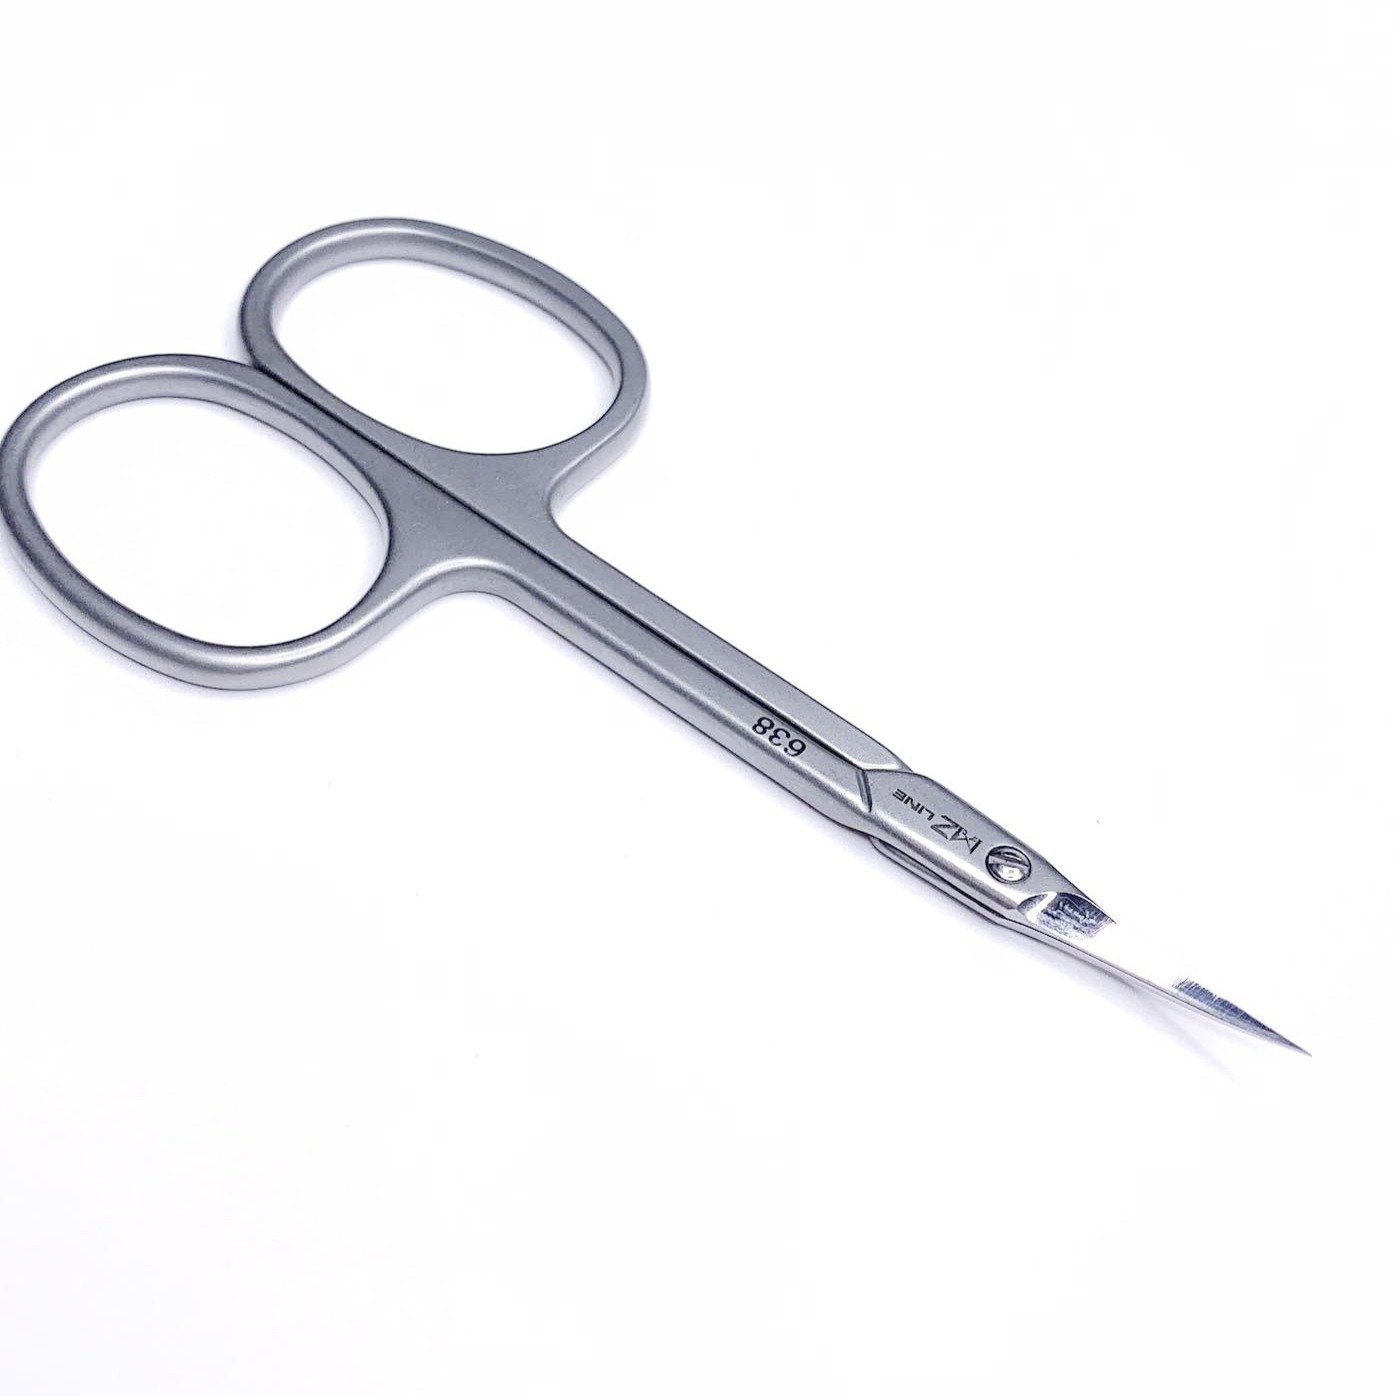 Mertz Professional Cuticle Nail Scissors - Model 638